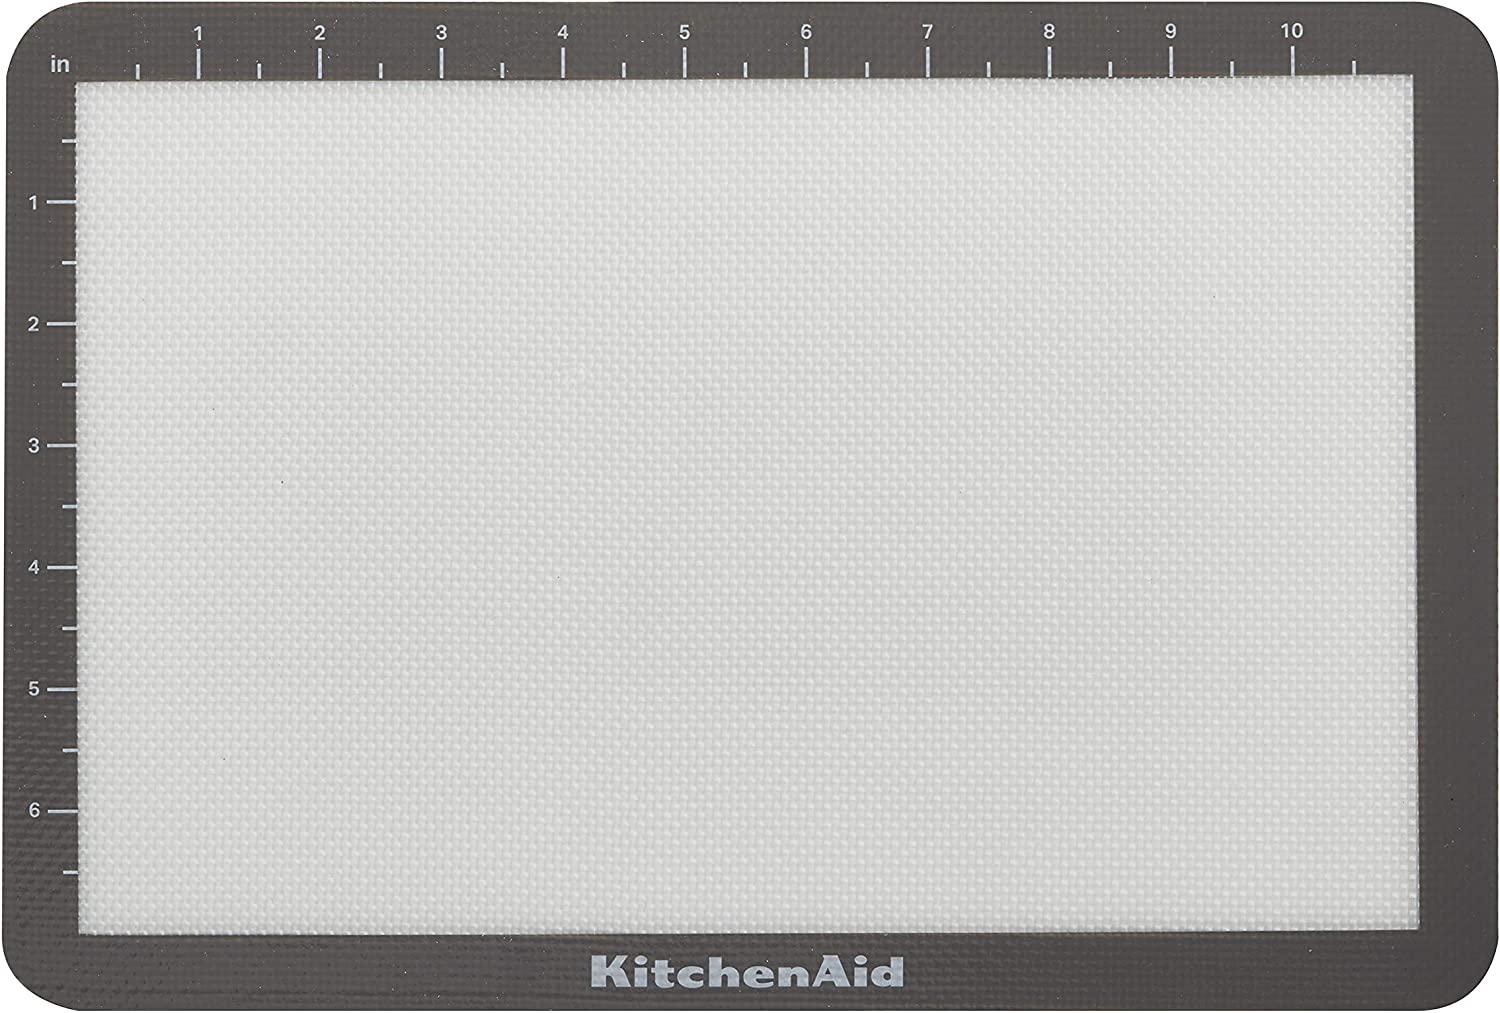 KitchenAid Silicone Baking Mat, 8x12-Inch, Gray